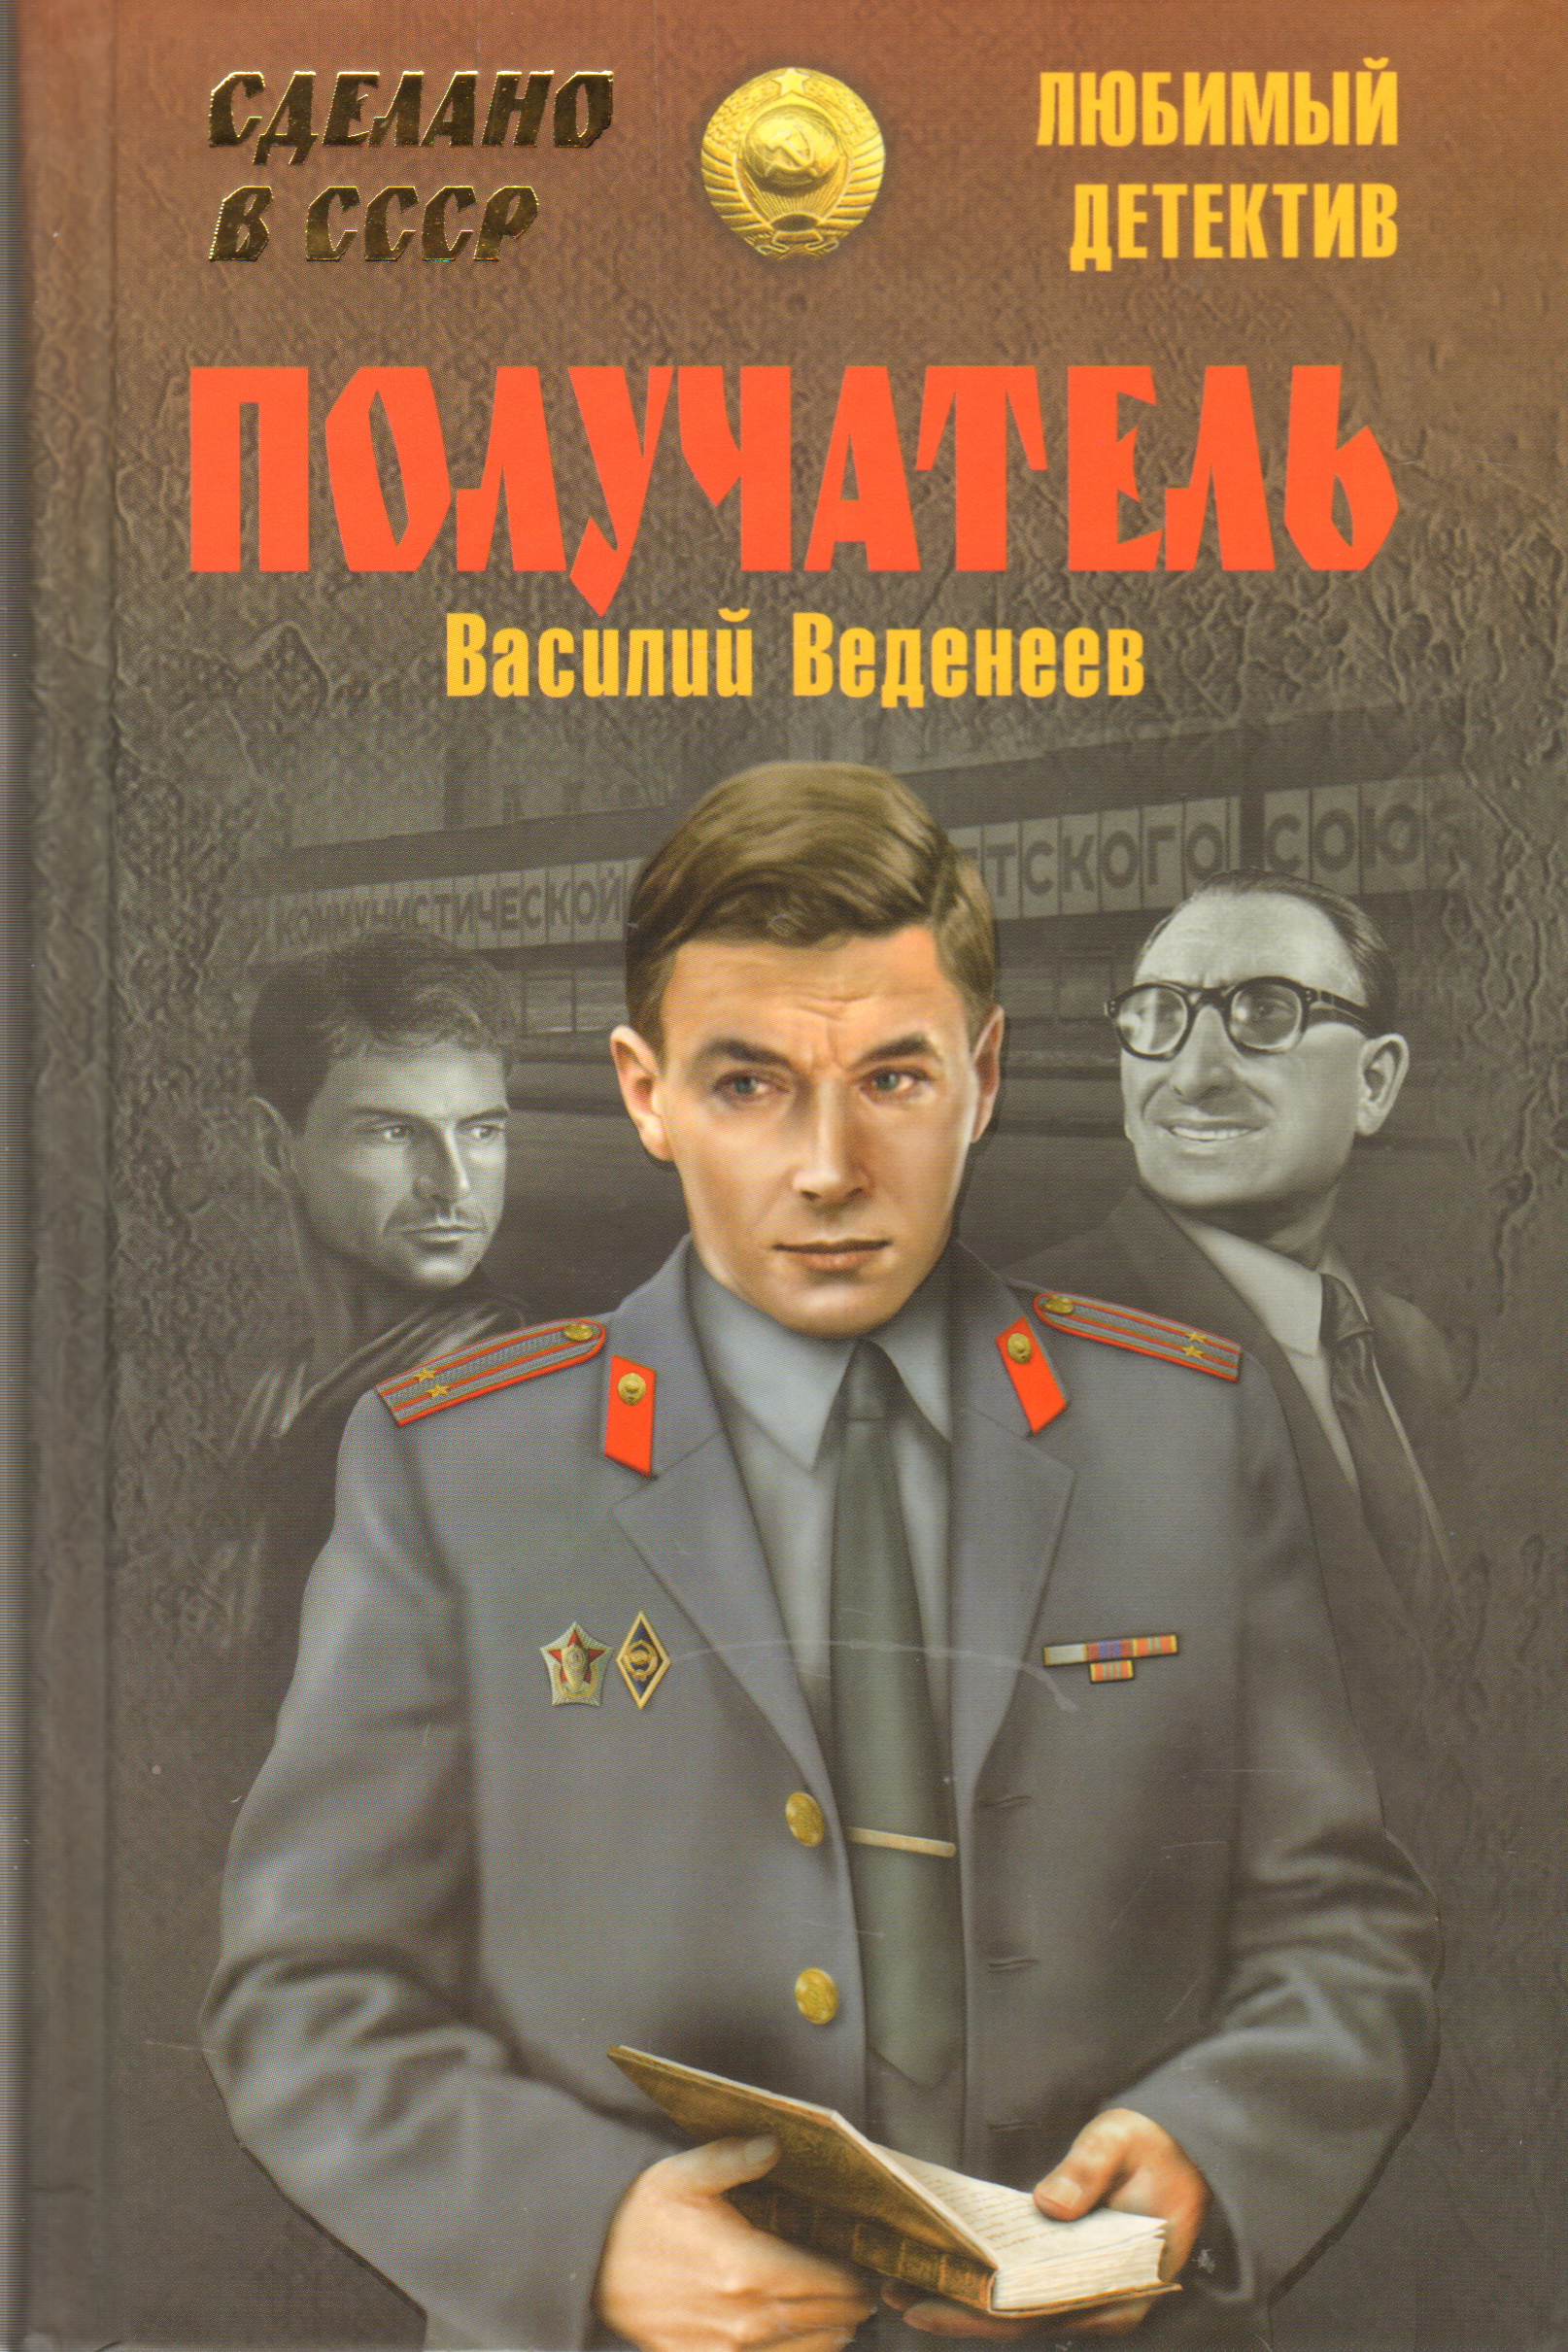 Обожаю детективы. Советские детективы. Детективы книги.